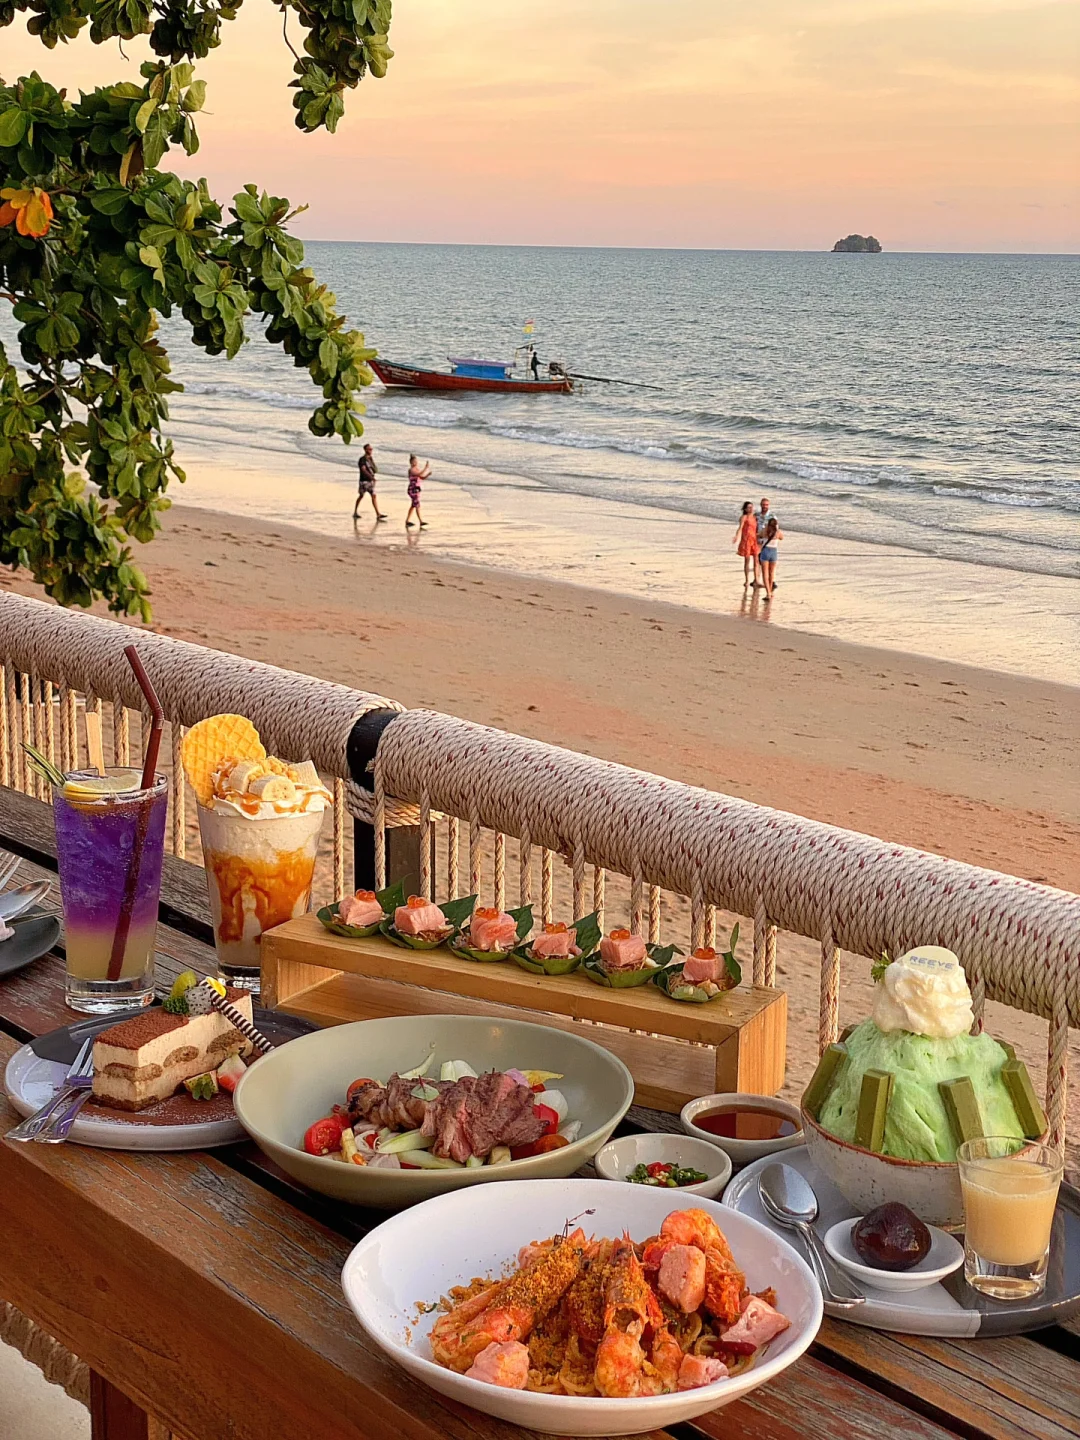 Krabi-Reeve Sunset Restaurant in Ao Nang Beach, Krabi, enjoy the beautiful sunset view